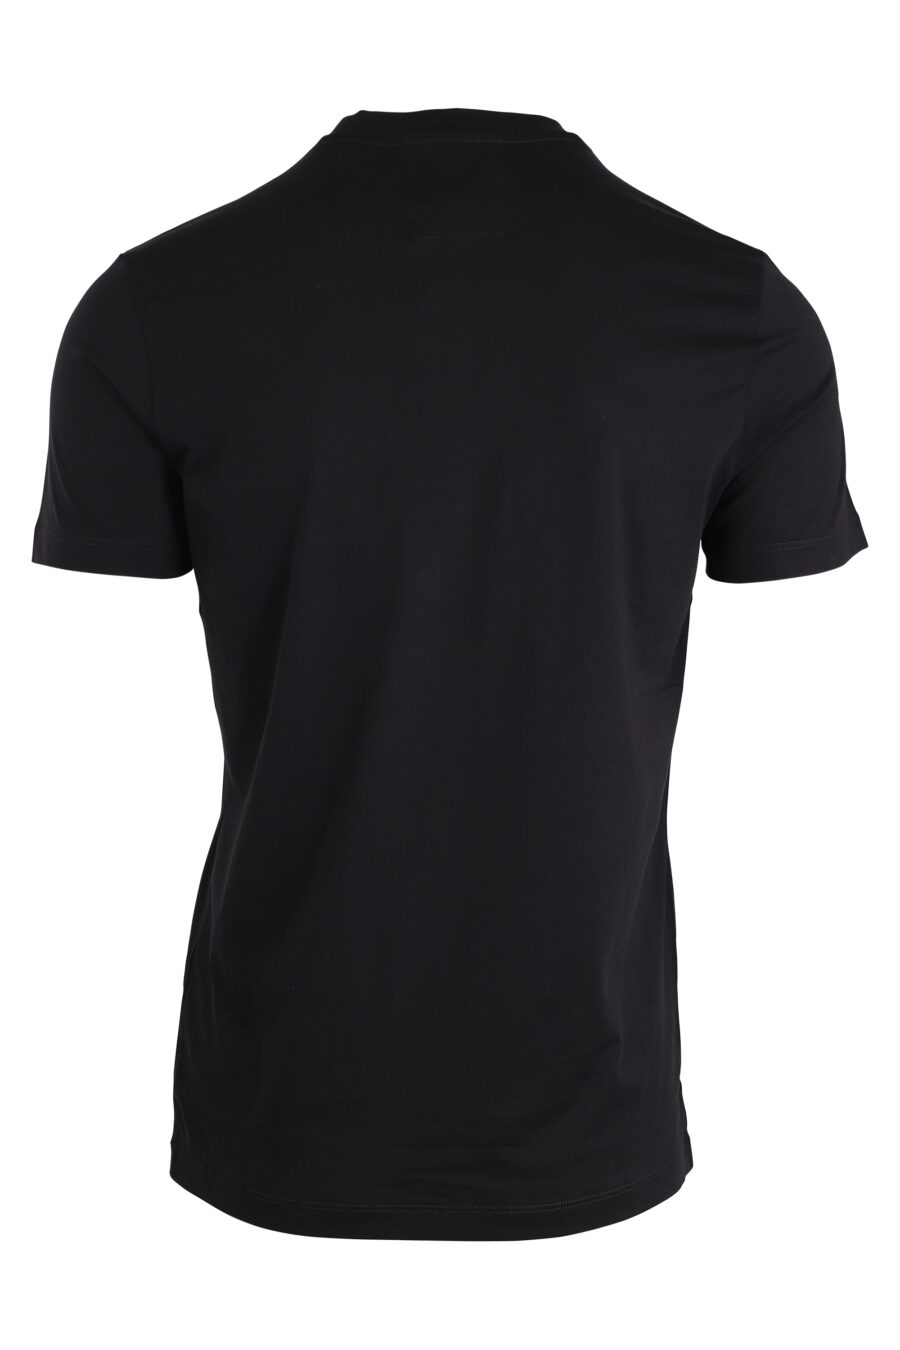 T-shirt black with white lettering maxilogo - IMG 4251